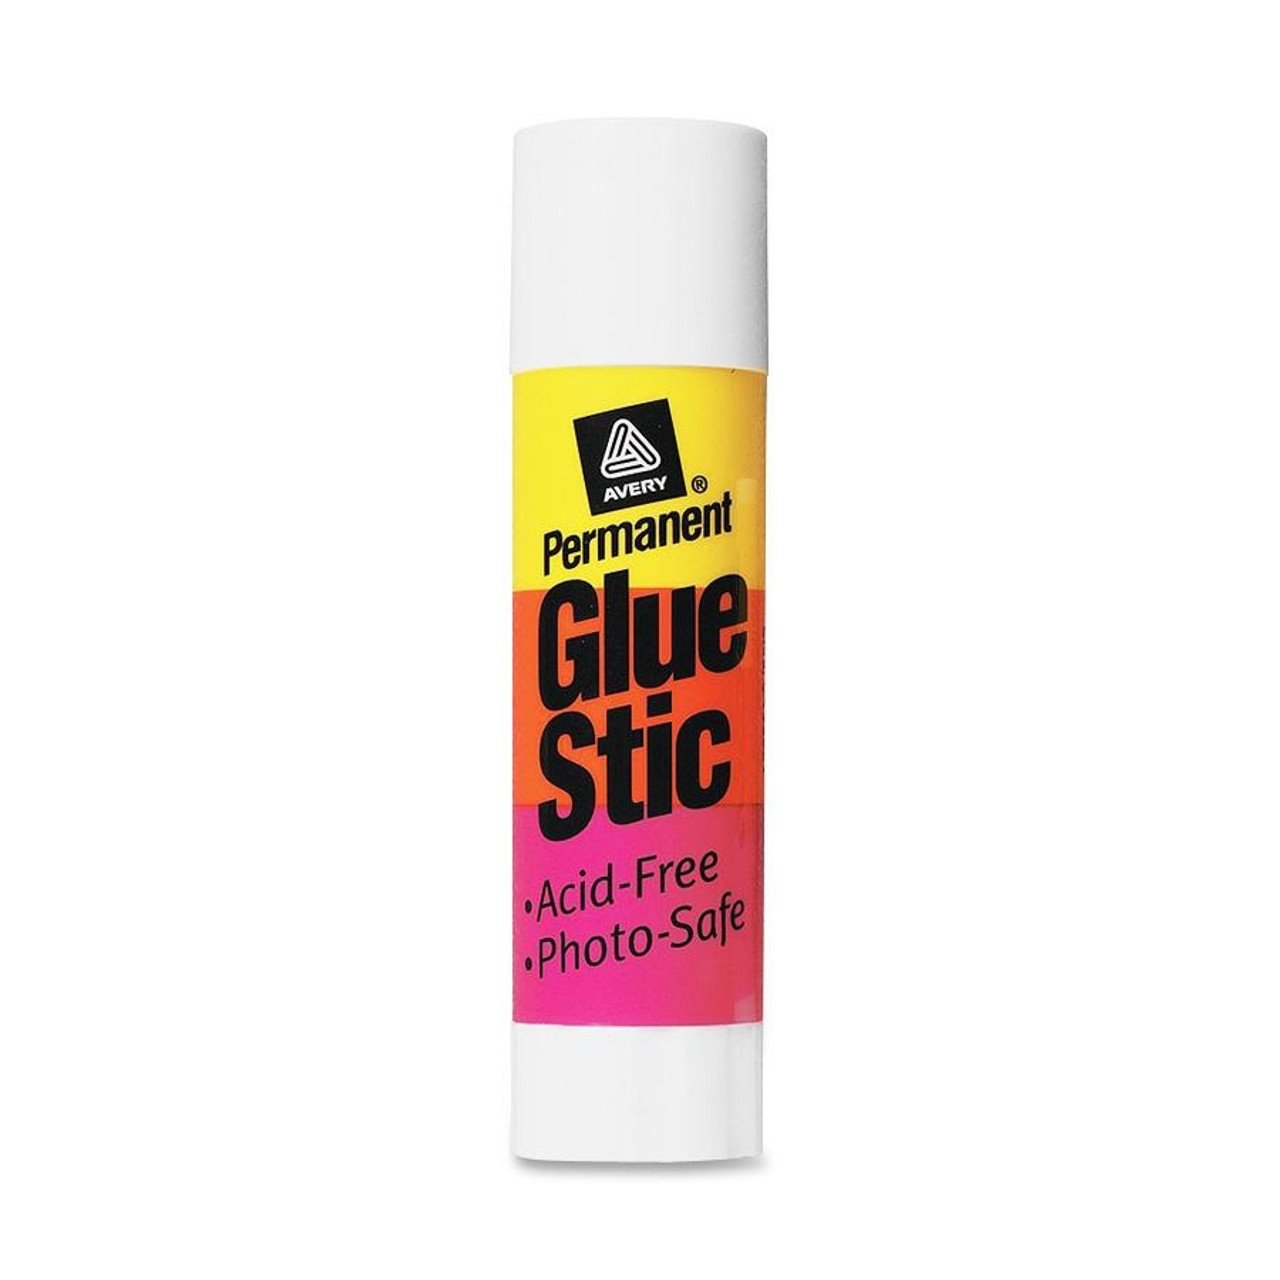 Avery Permanent Glue Stick - 1.27 Oz - 1each - White (00196)